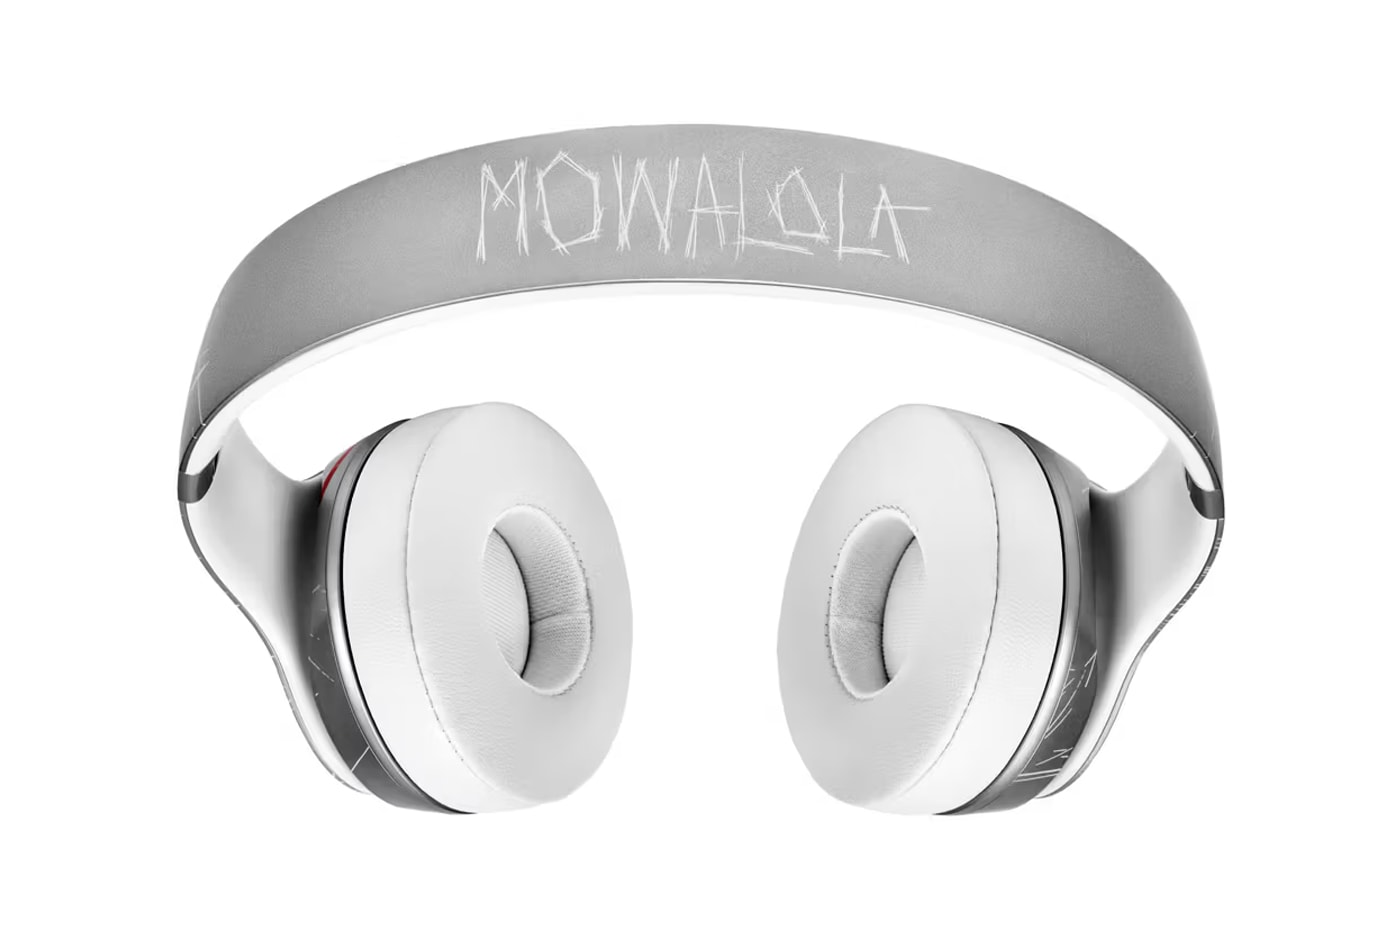 Mowalola Beats Solo3 Wireless New Collaboration bluetooth headphones september 21 launch details us uk canada price london fashion designer